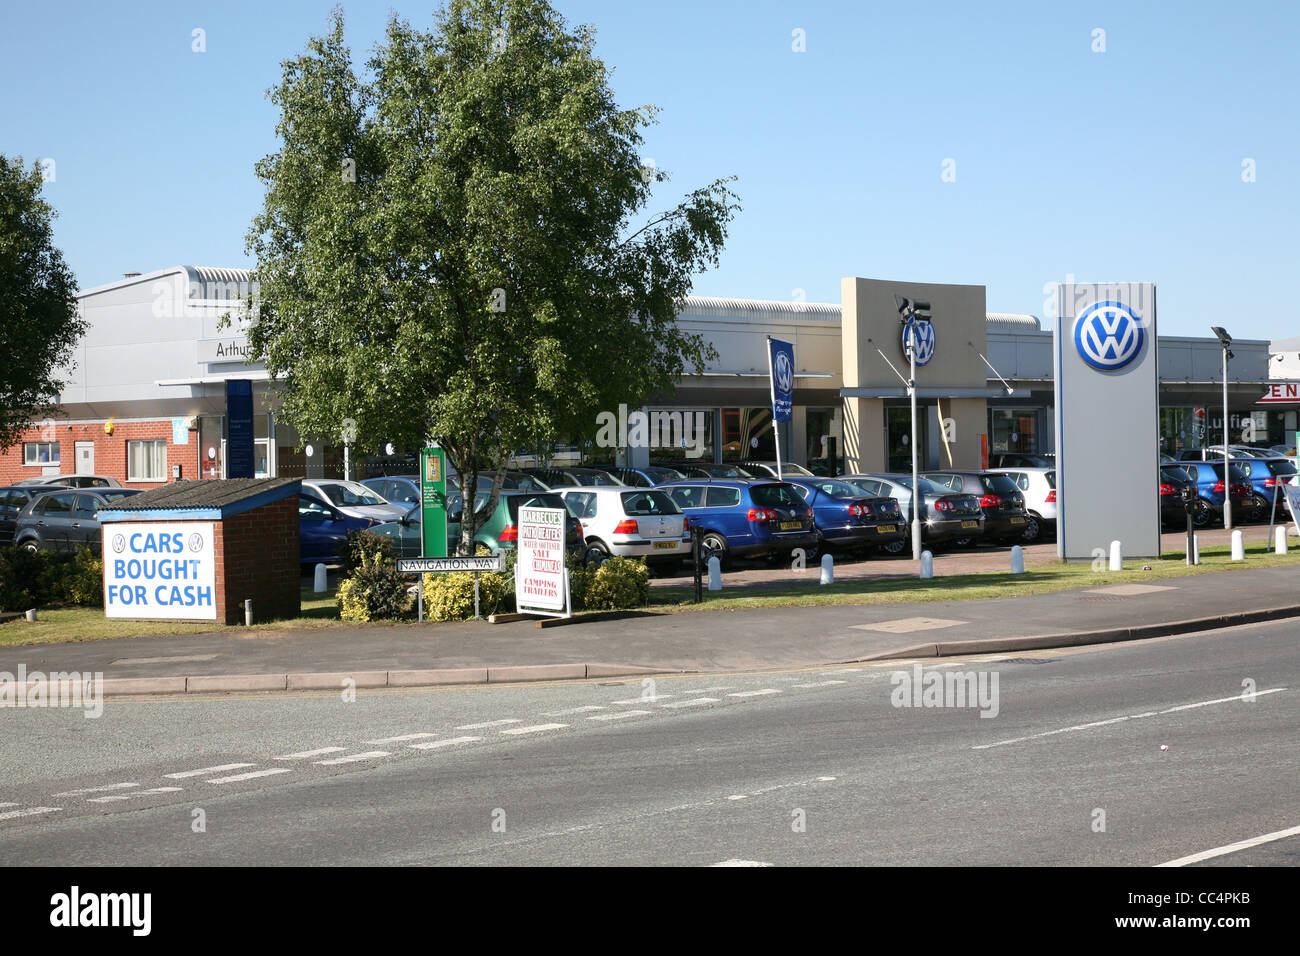 volkswagen car dealership in loughborough Stock Photo